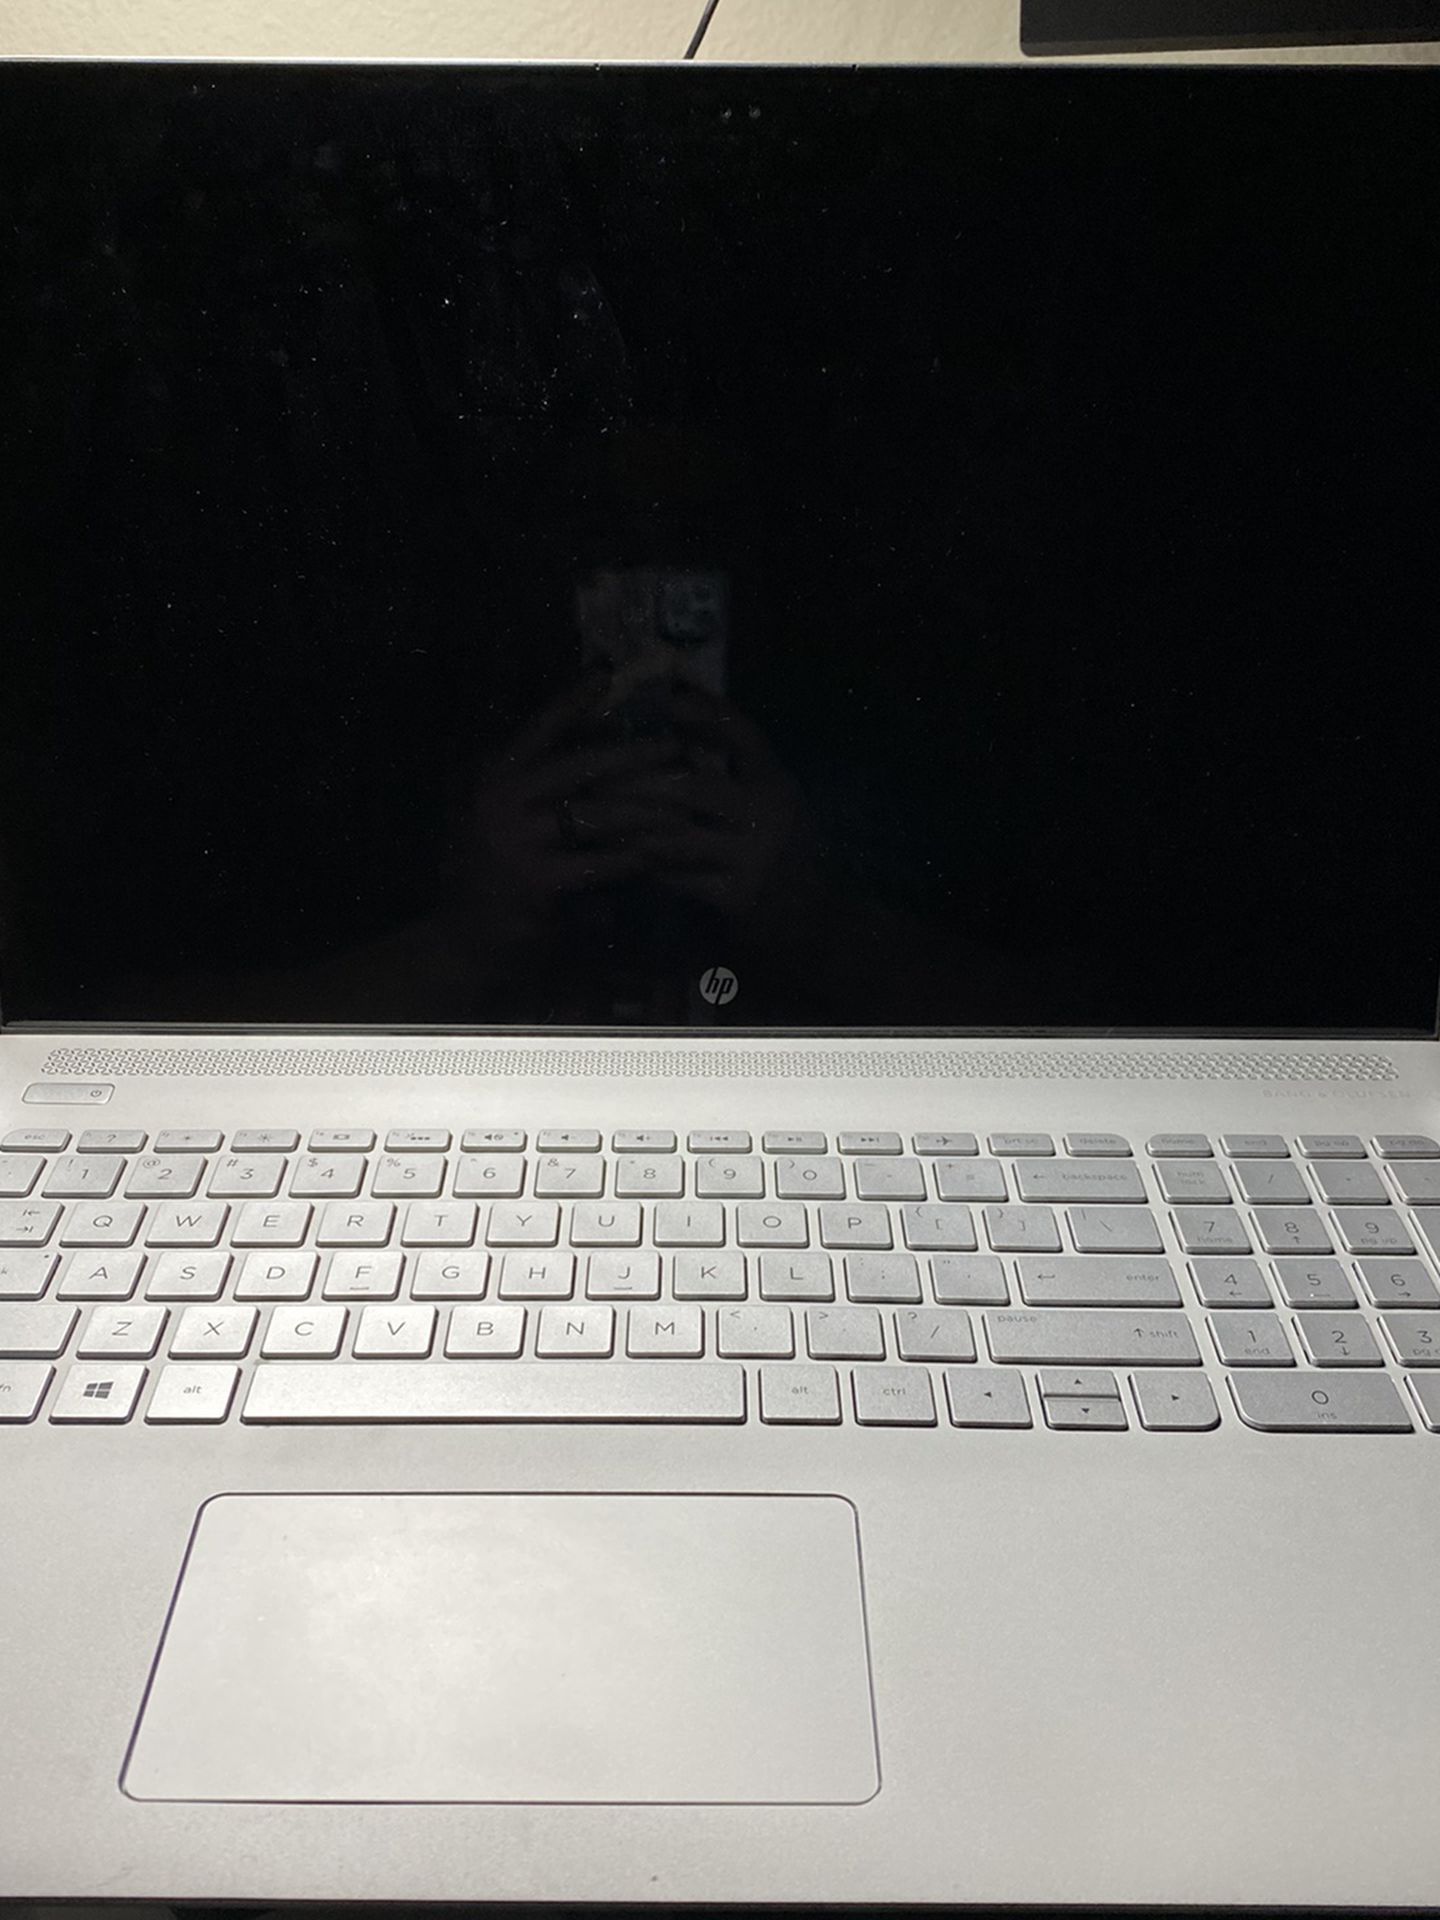 HP Envy 15 Touch Screen Laptop